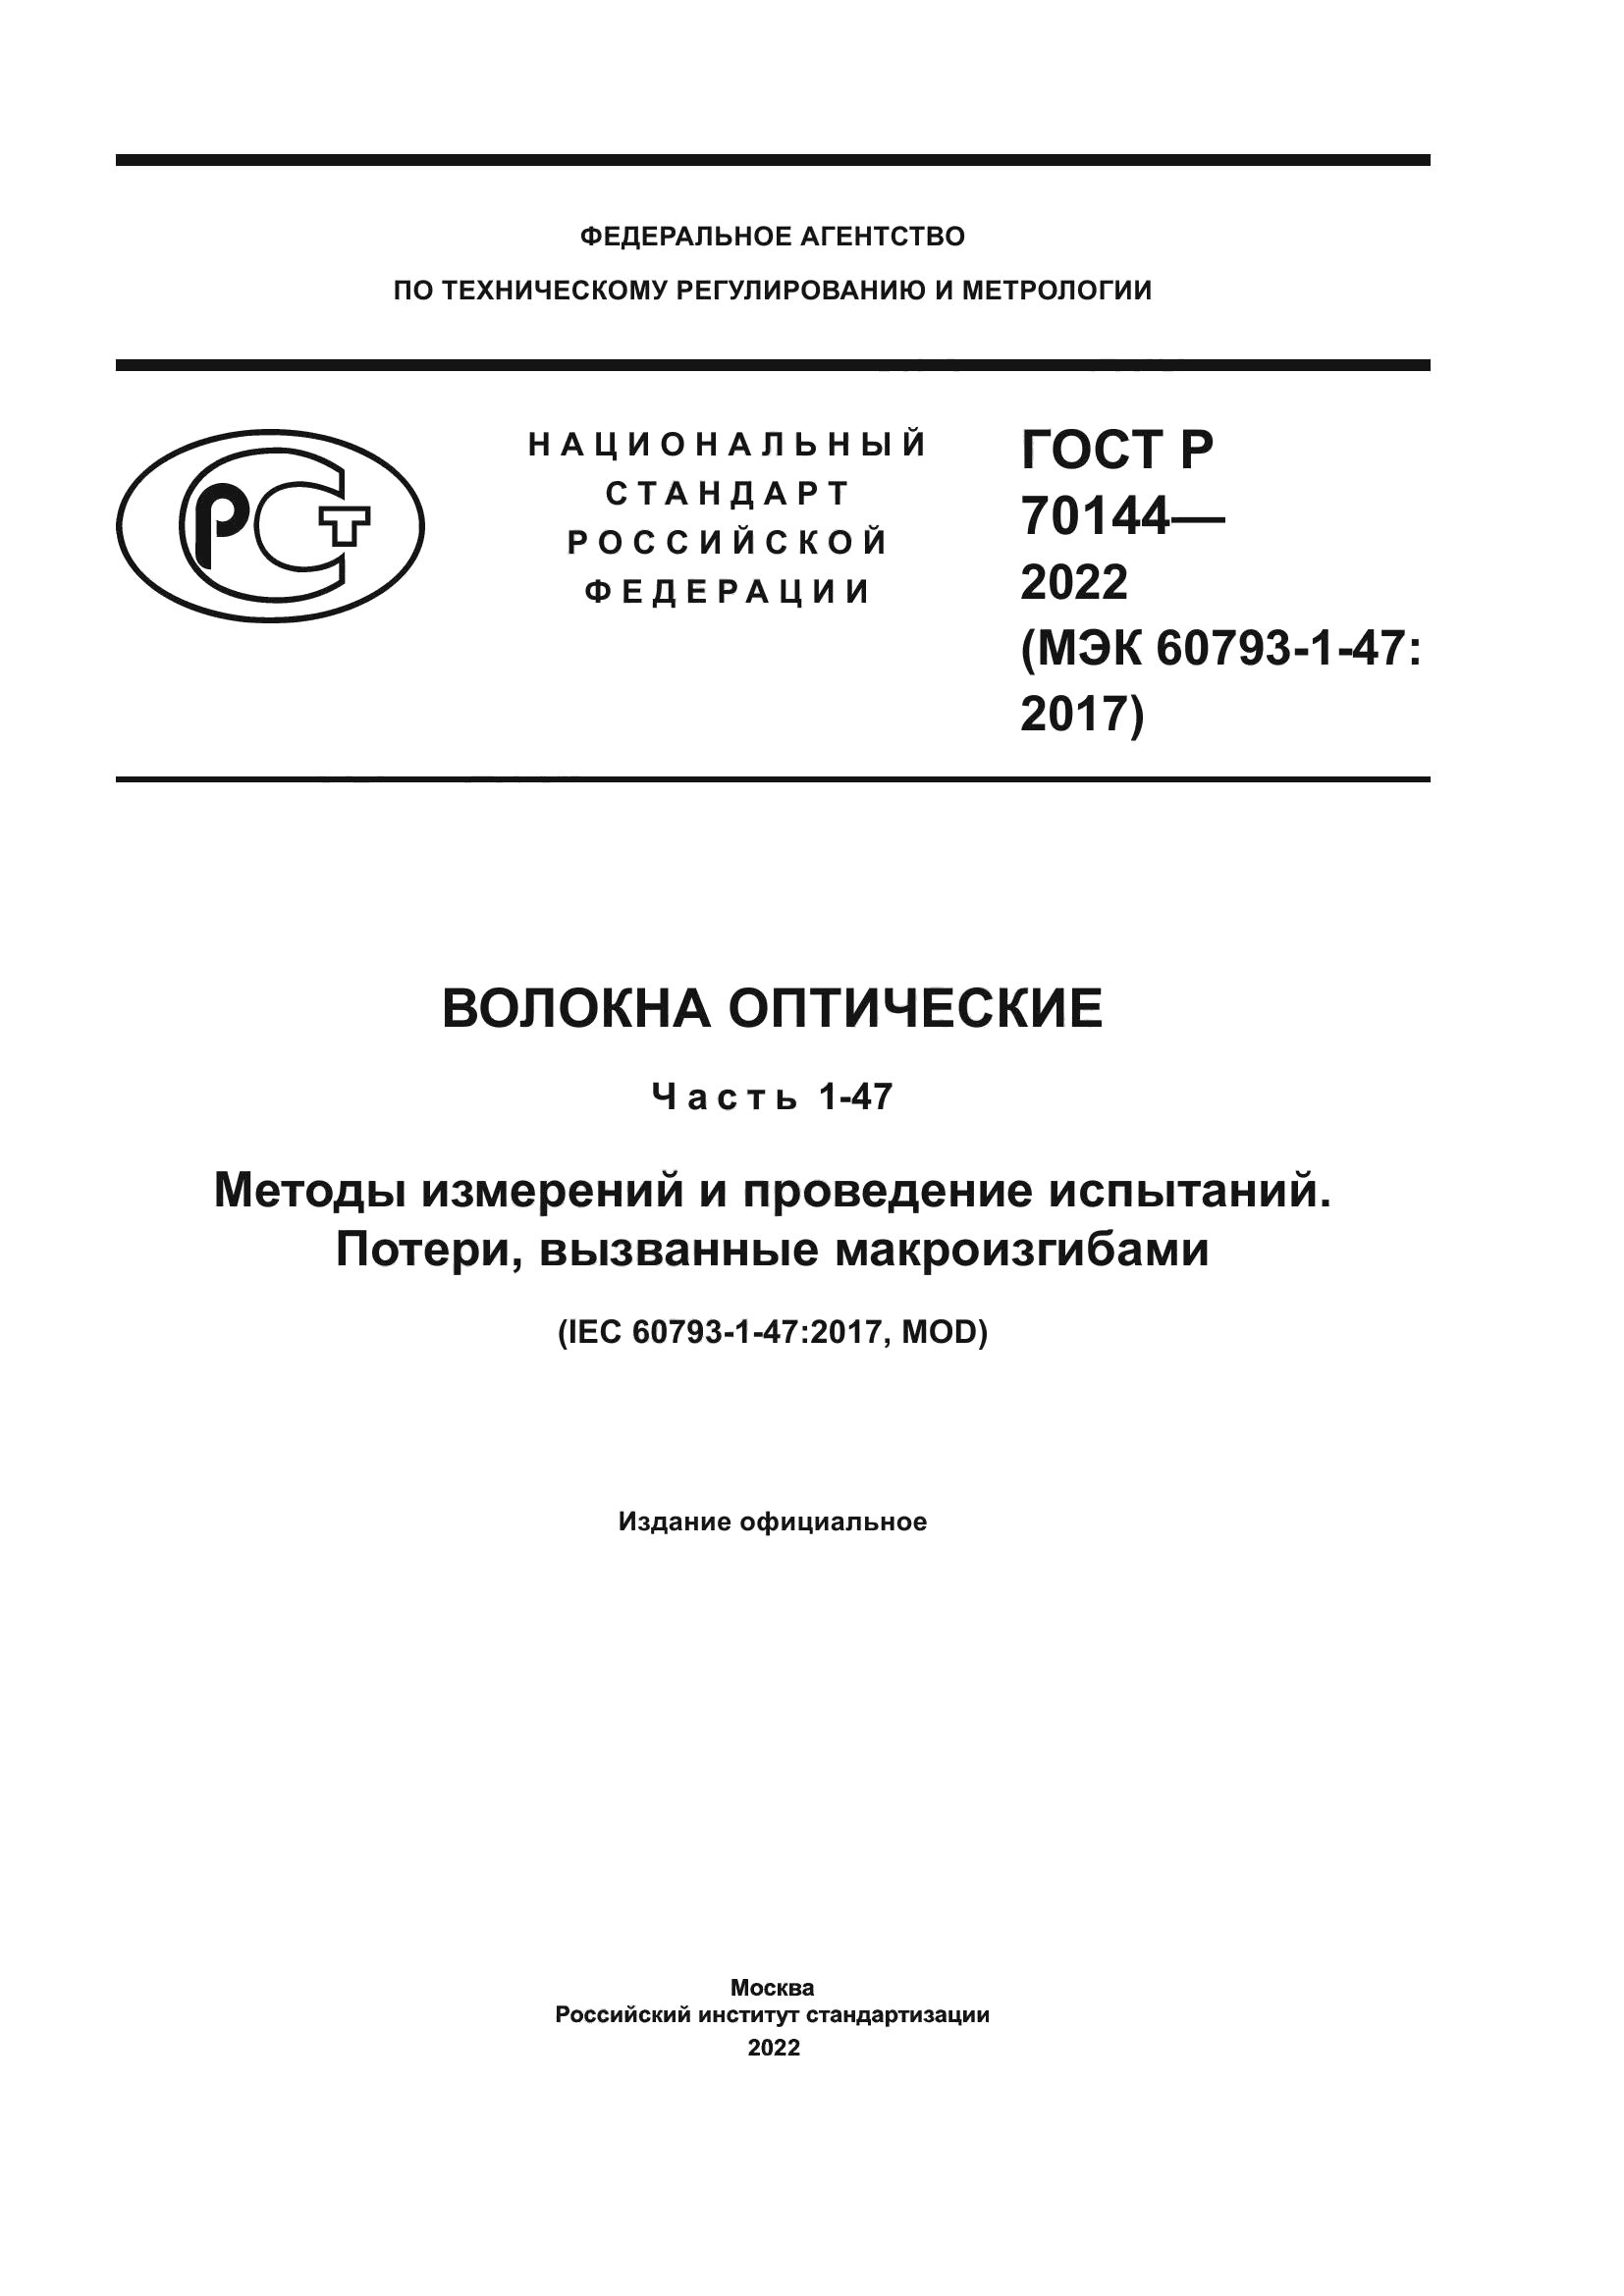 ГОСТ Р 70144-2022